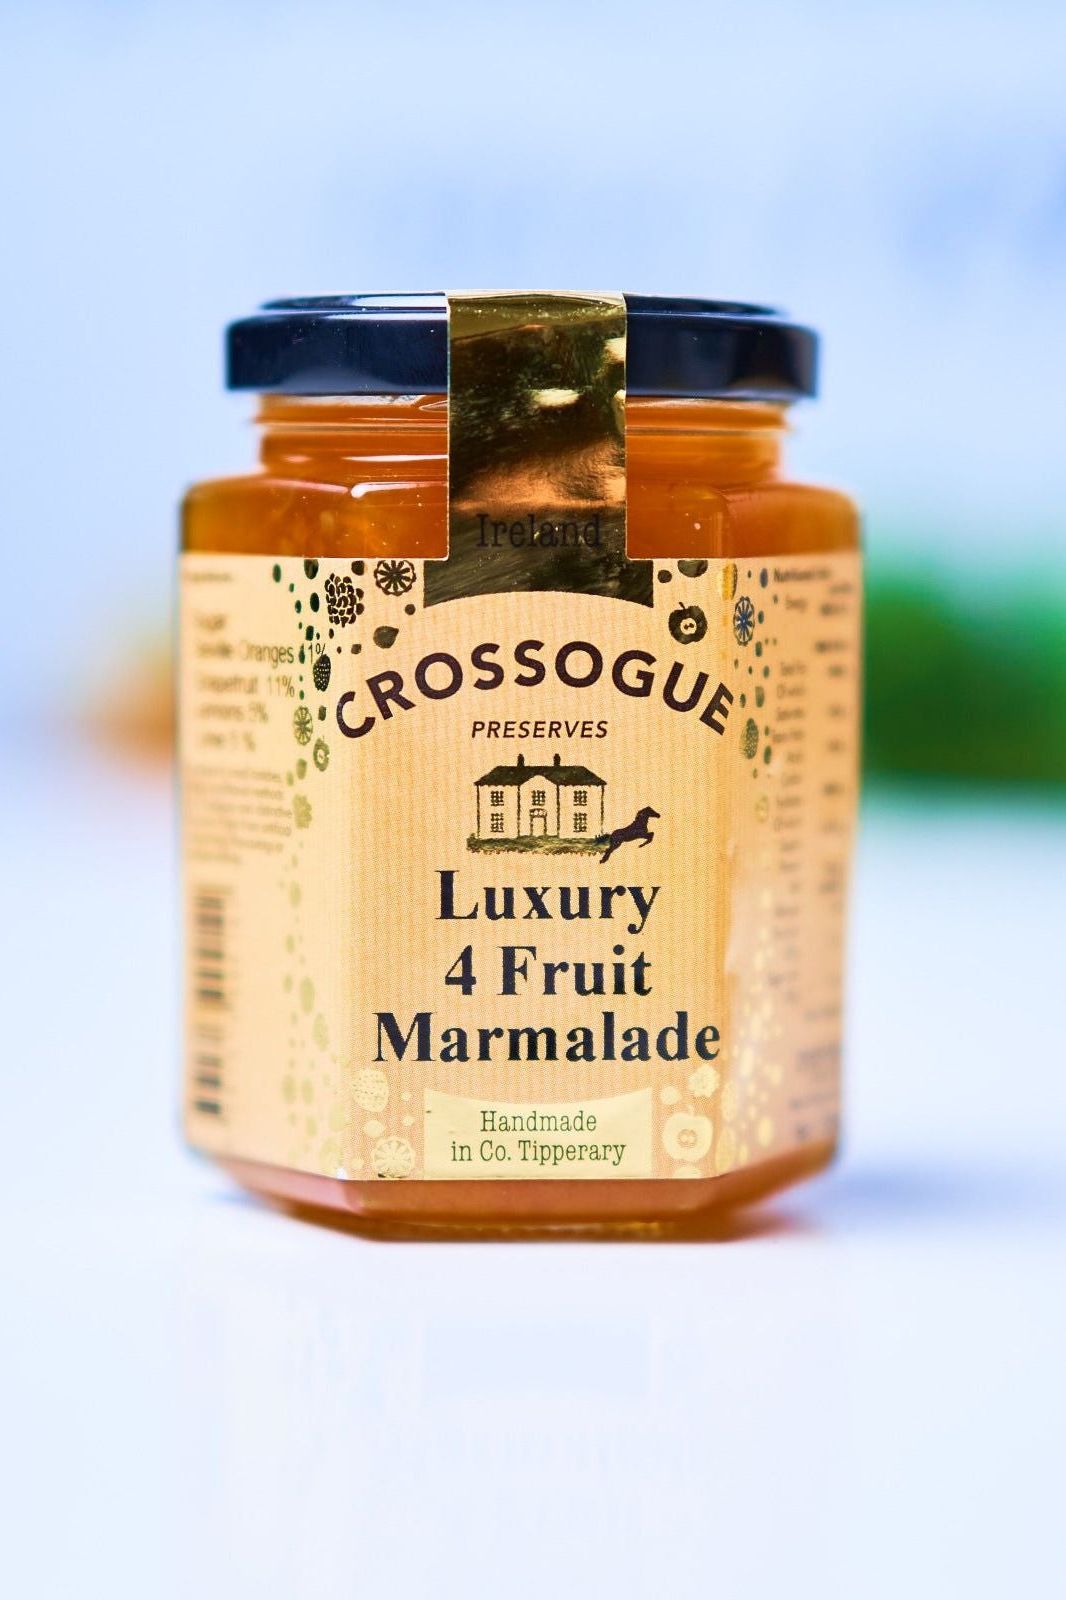 Crossogue luxury 4 fruit marmalade